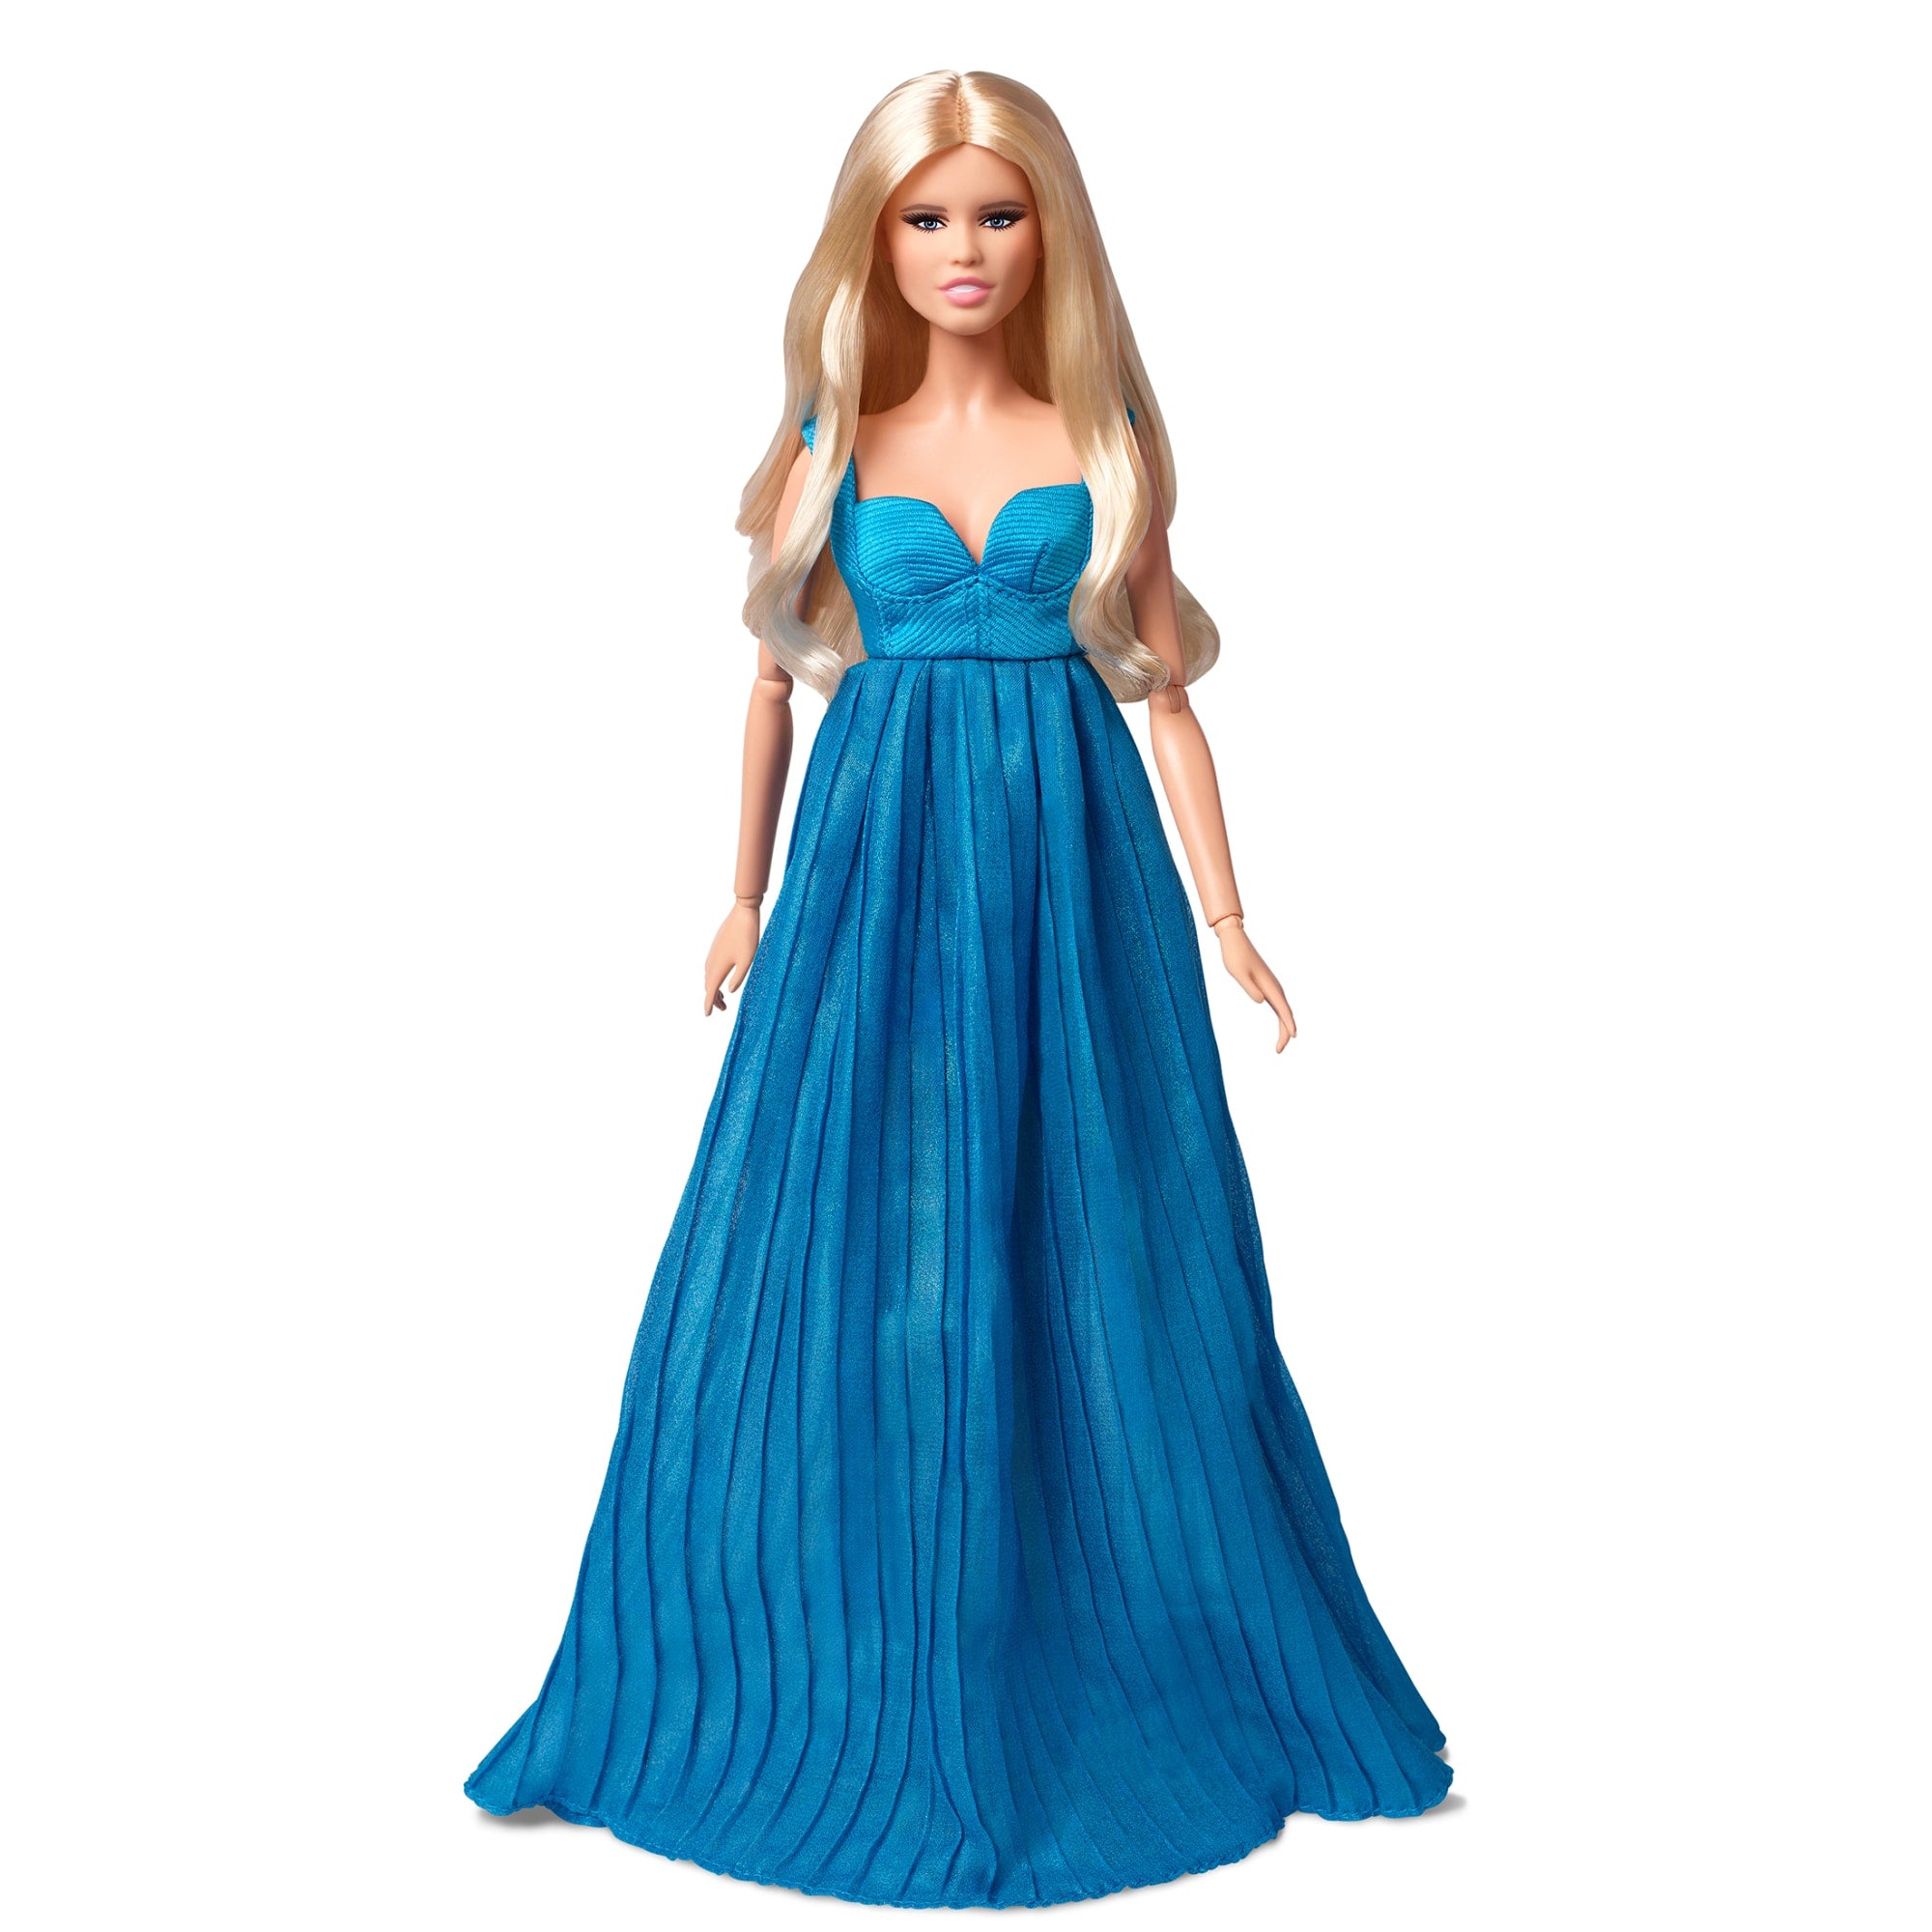 Multicolor Barbie Doll Dresses at Best Price in Delhi | Mehak Enterprises